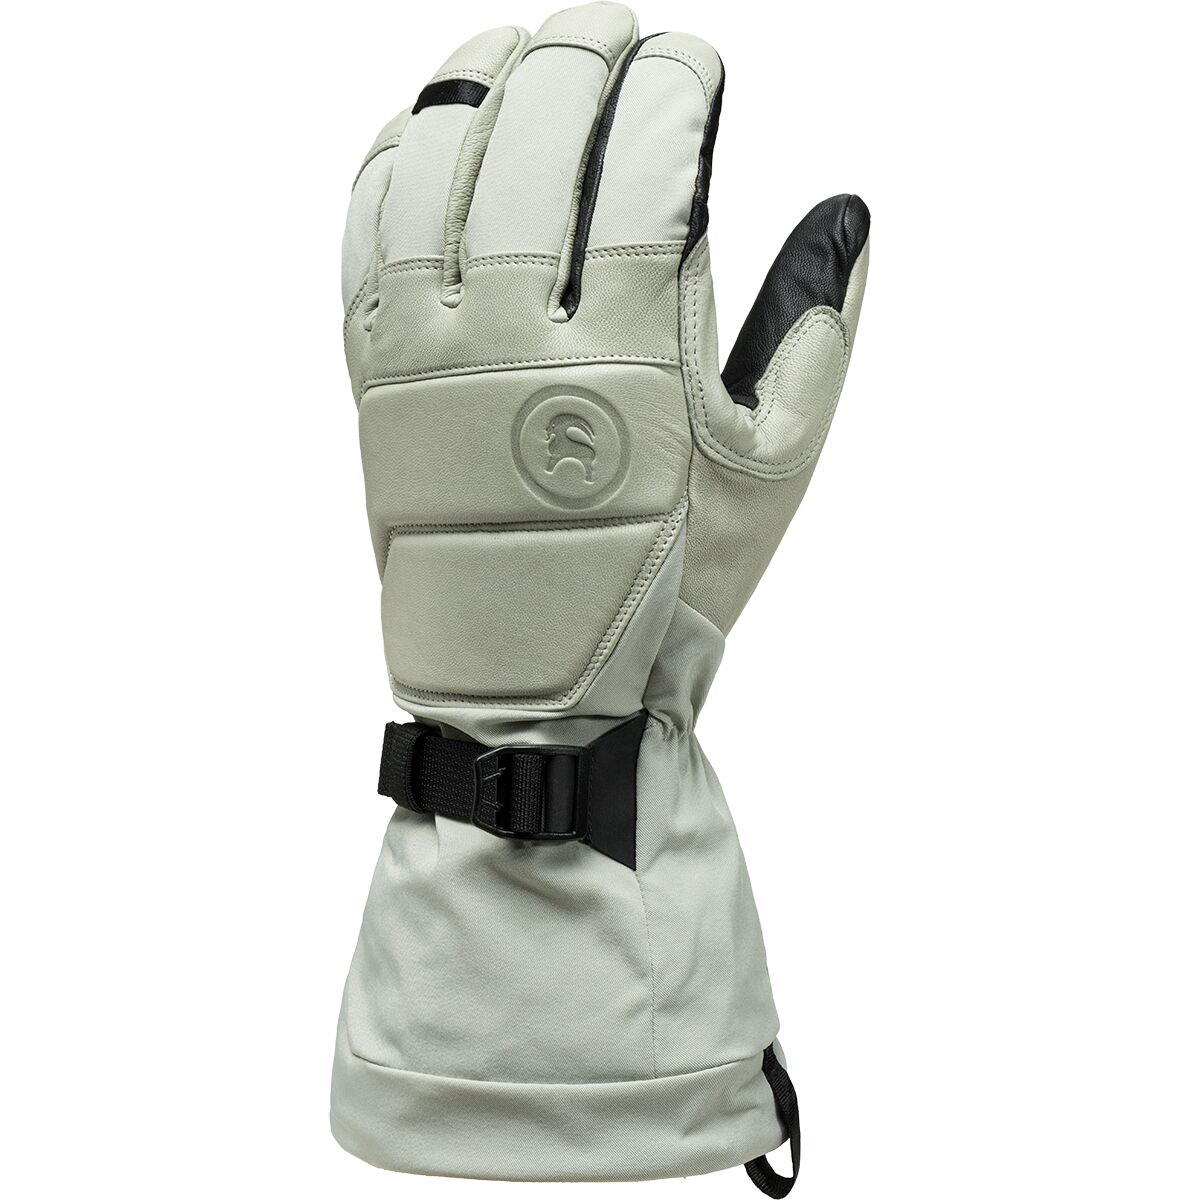 Backcountry GORE-TEX All-Mountain Glove